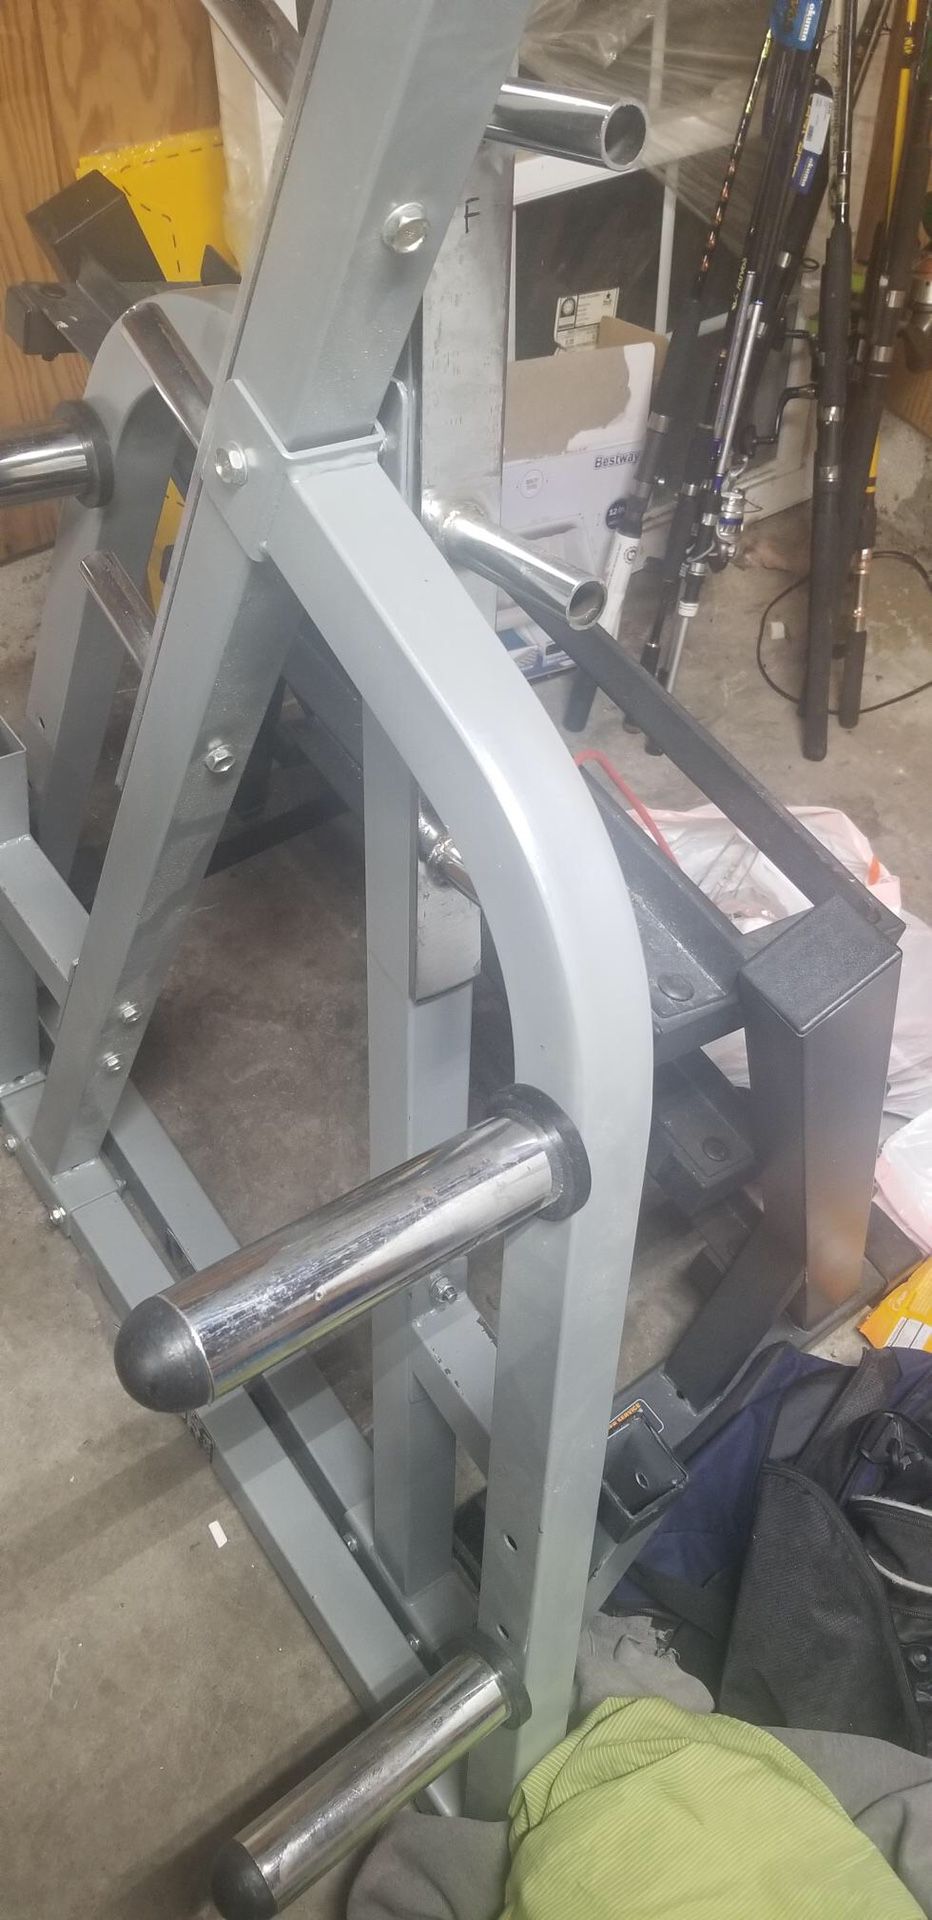 Bench/squat press and dumbbells